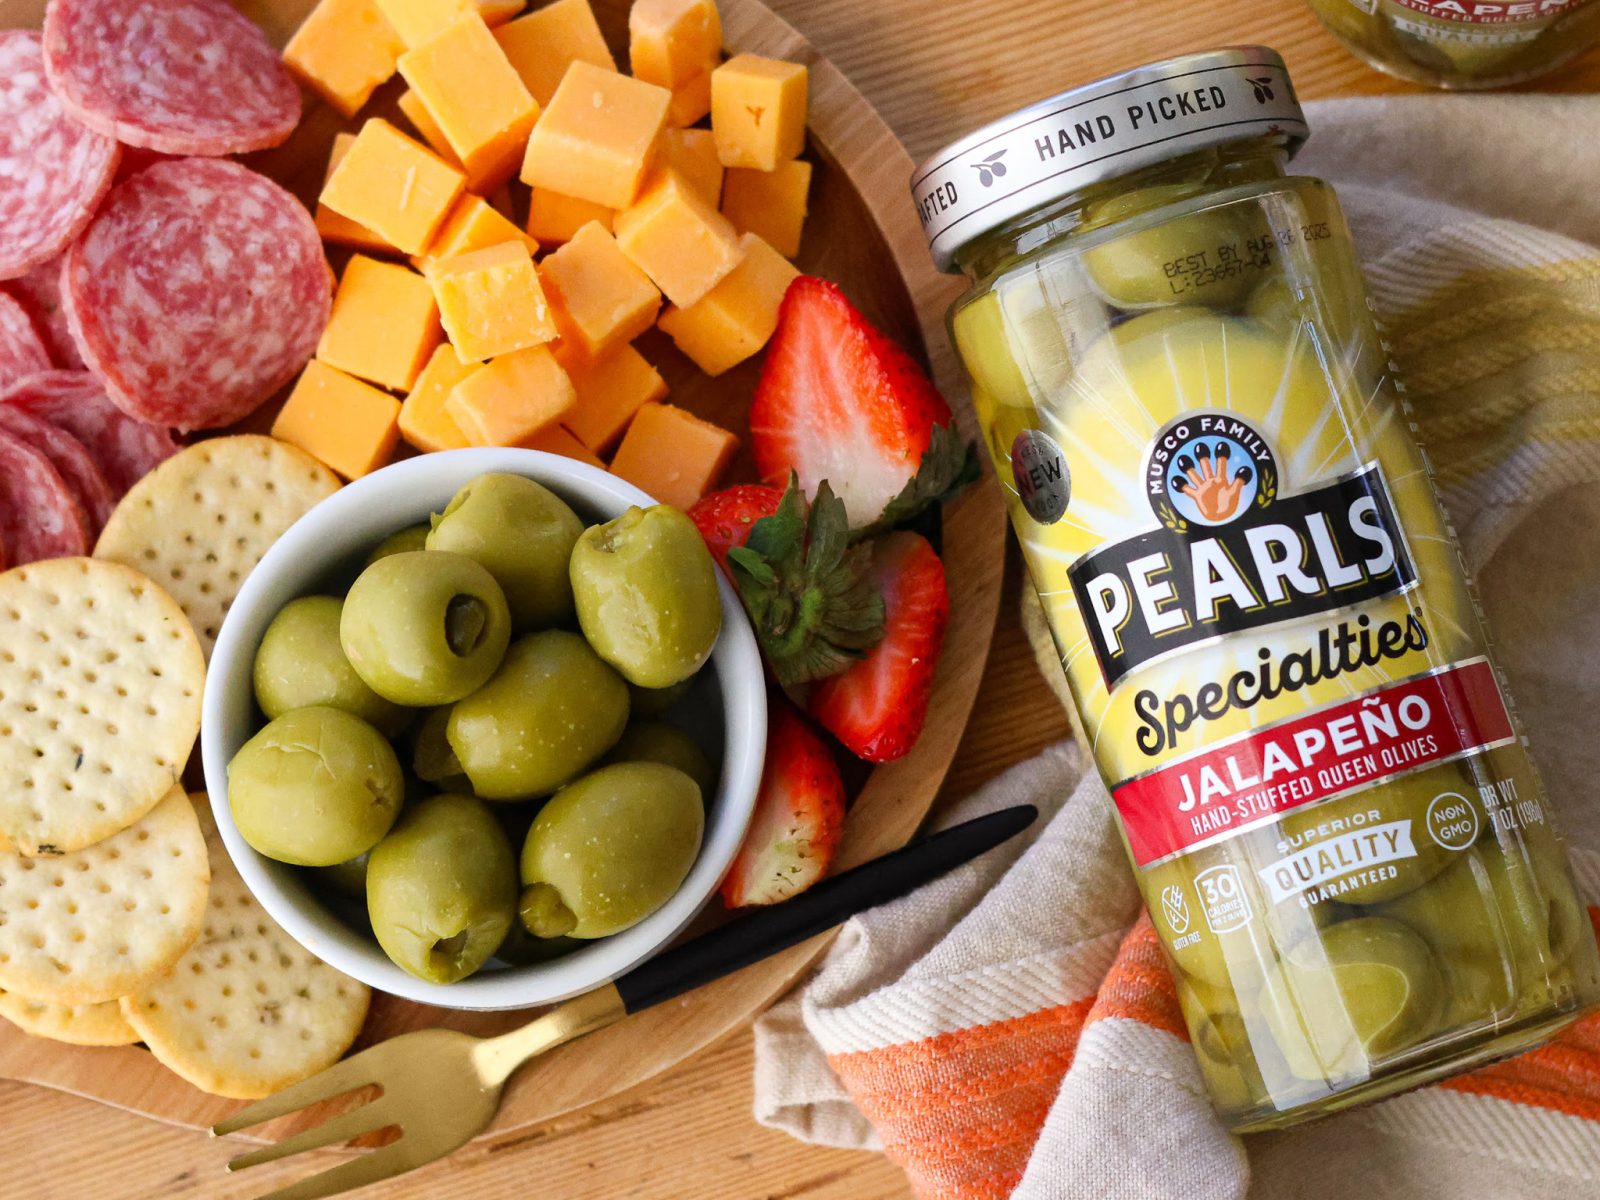 Pearls Specialties Stuffed Queen Olives Just $3.49 Per Jar At Kroger – Save $1.50